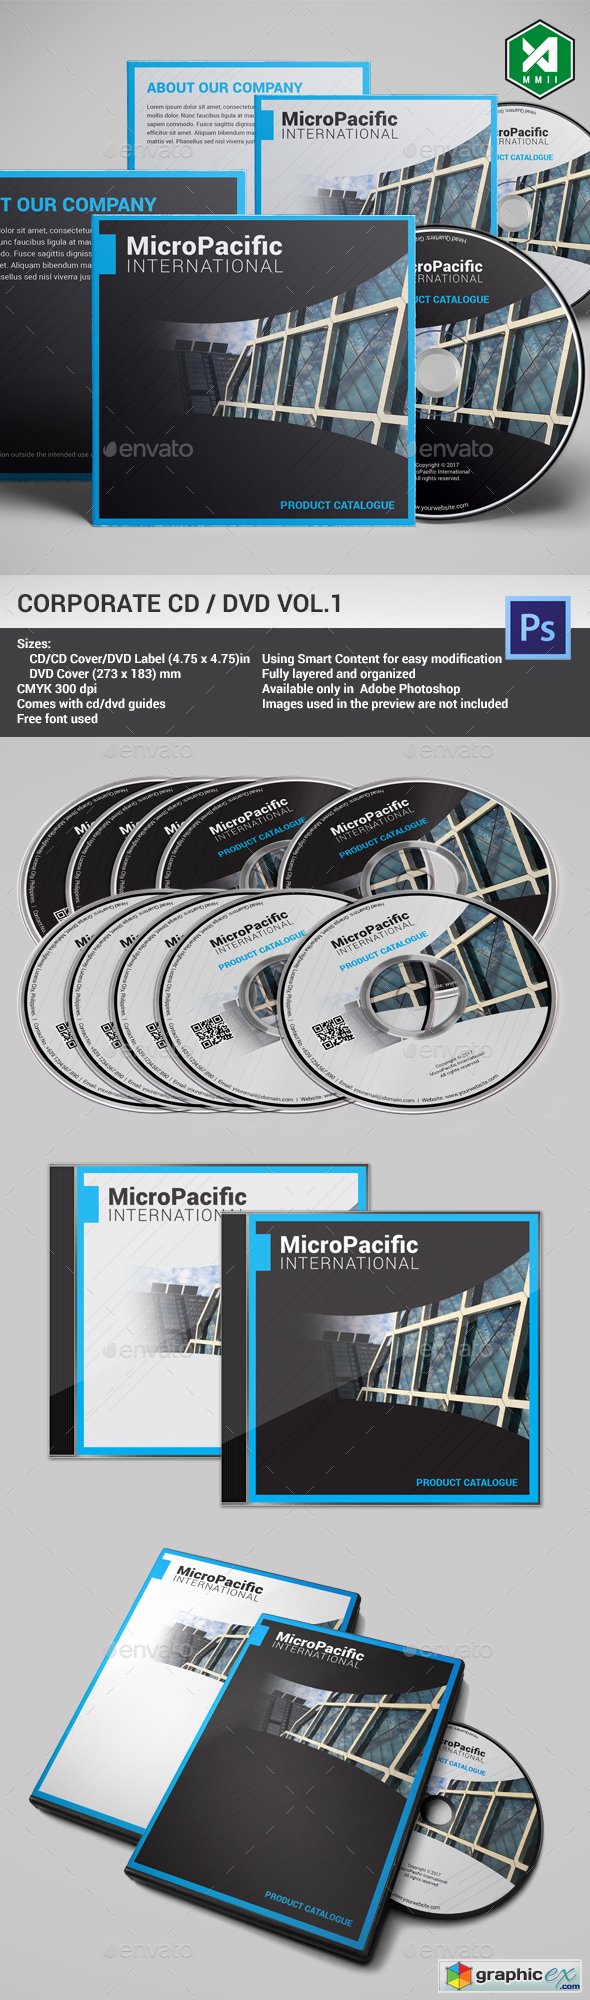 Corporate CD / DVD Template Vol 1